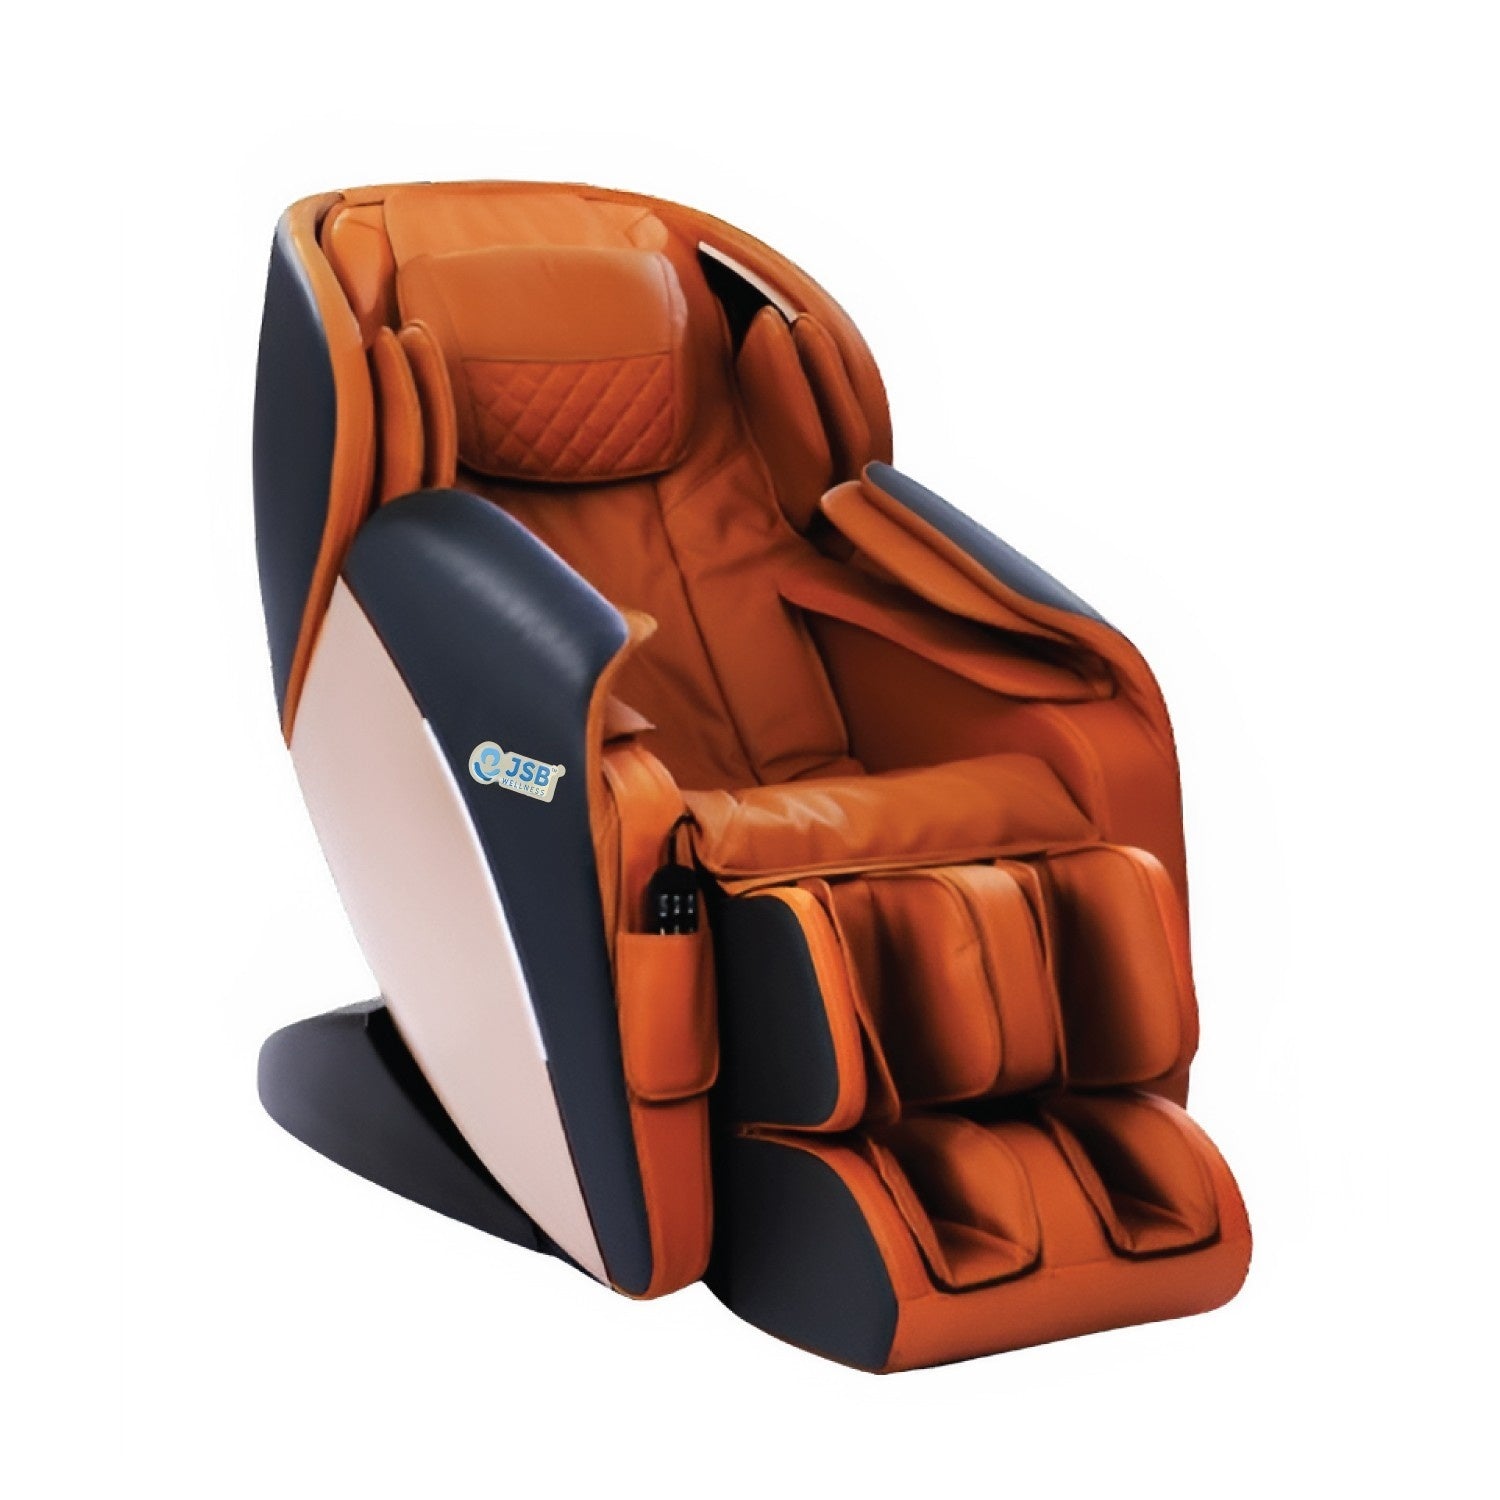 Full Body Massage Chair 3D Zero Gravity Recliner JSB MZ19